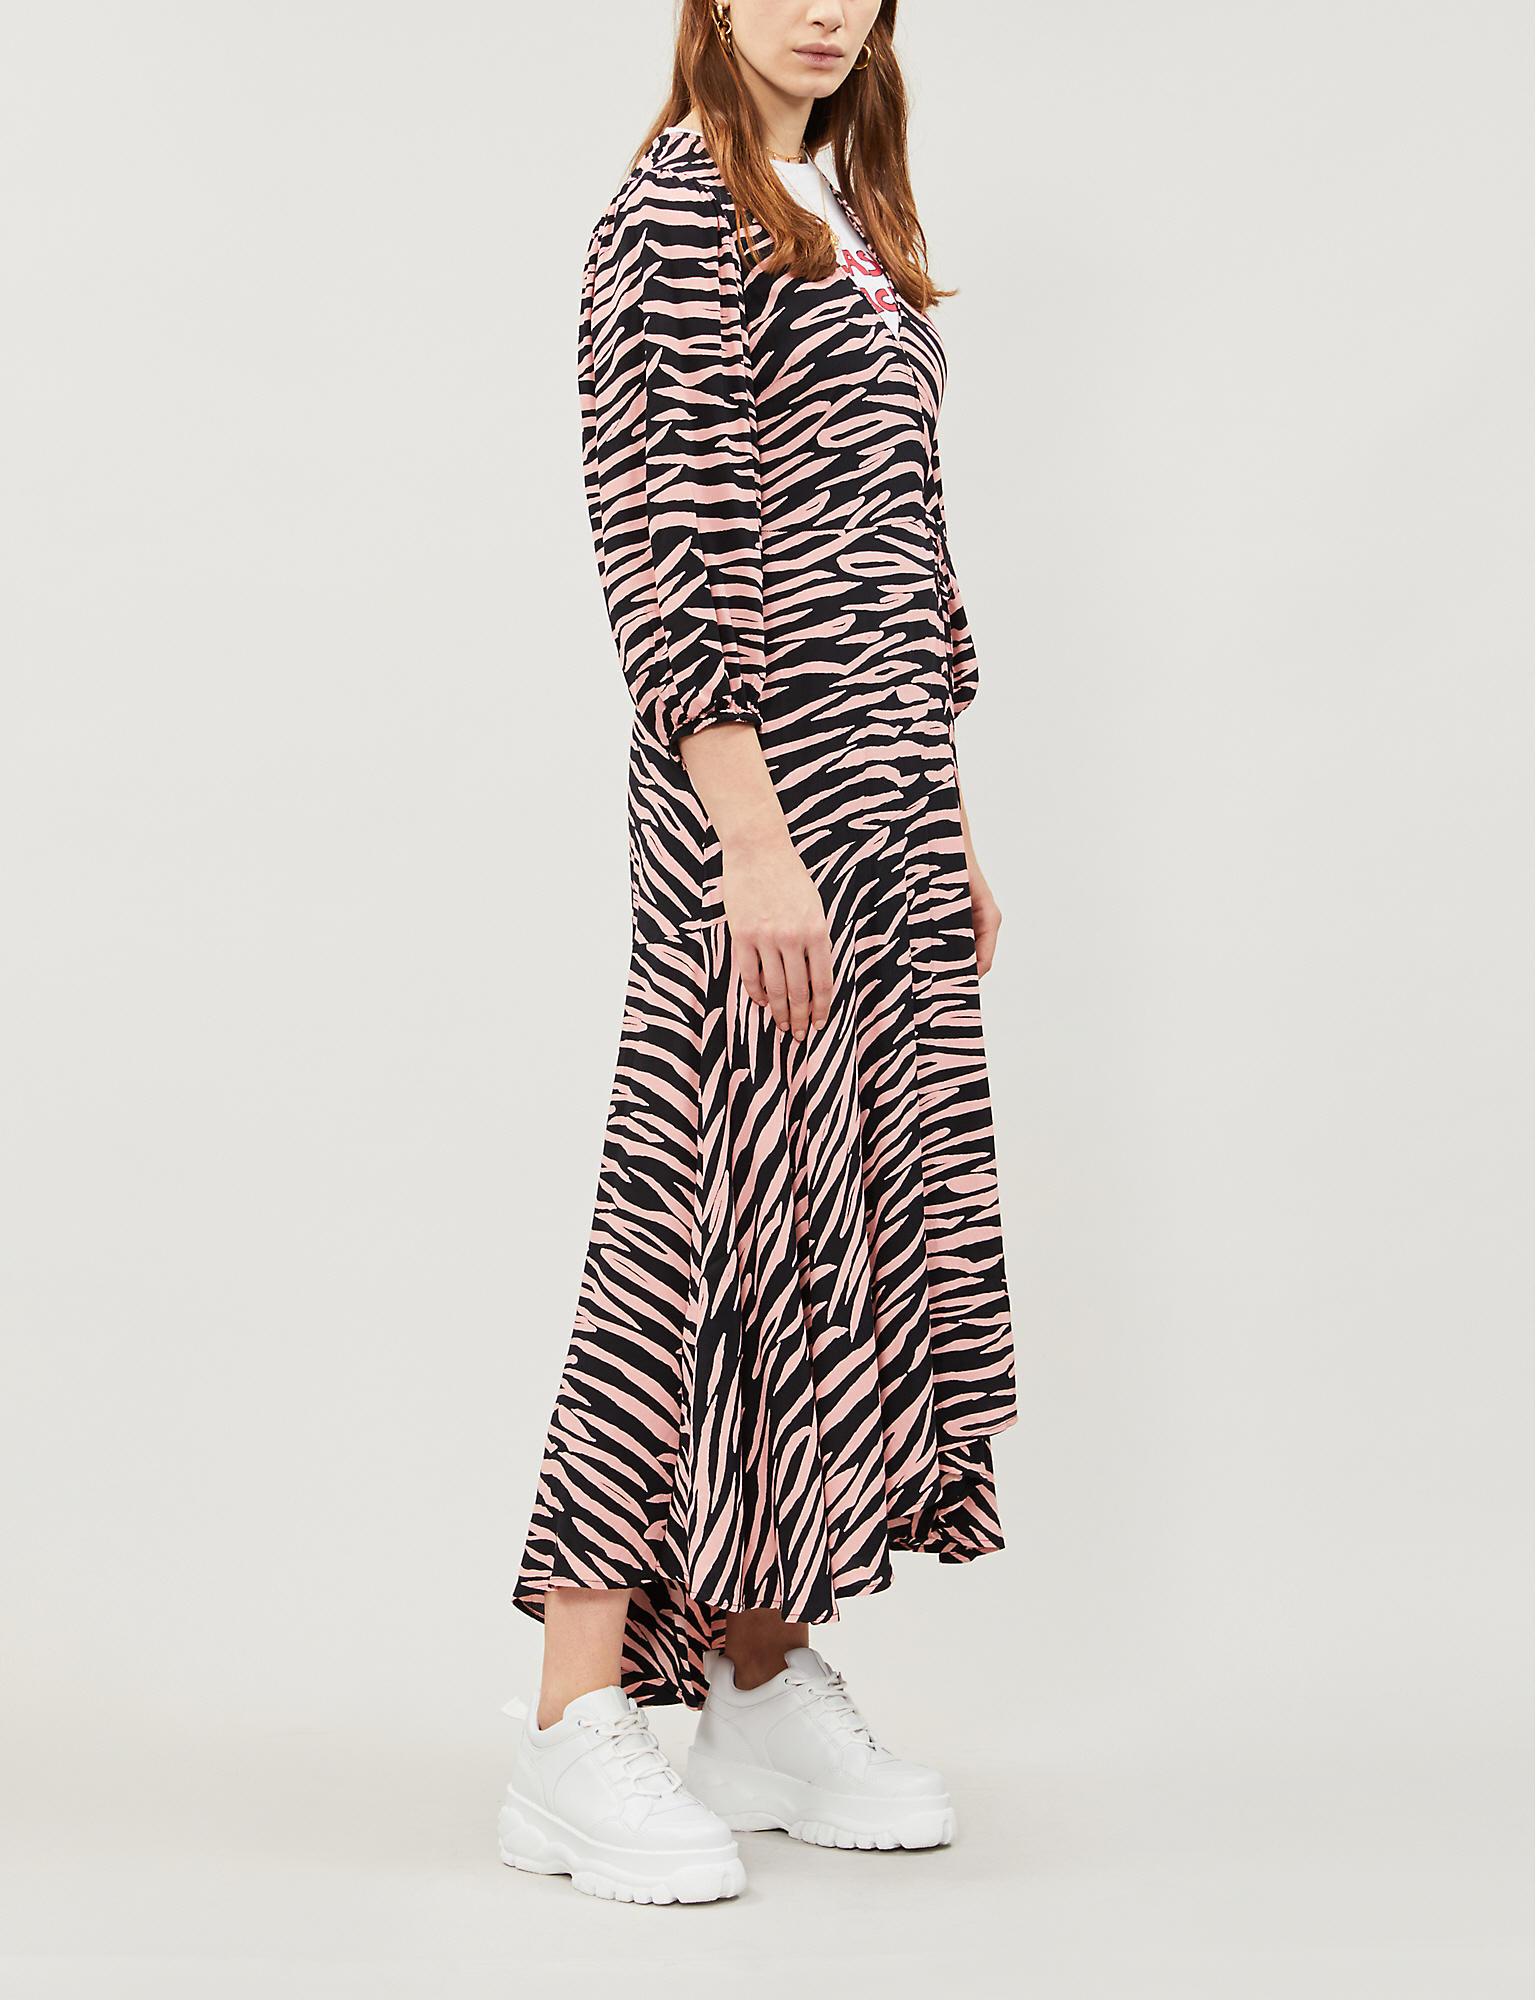 Ganni Denim Zebra Print Wrap Dress in ...